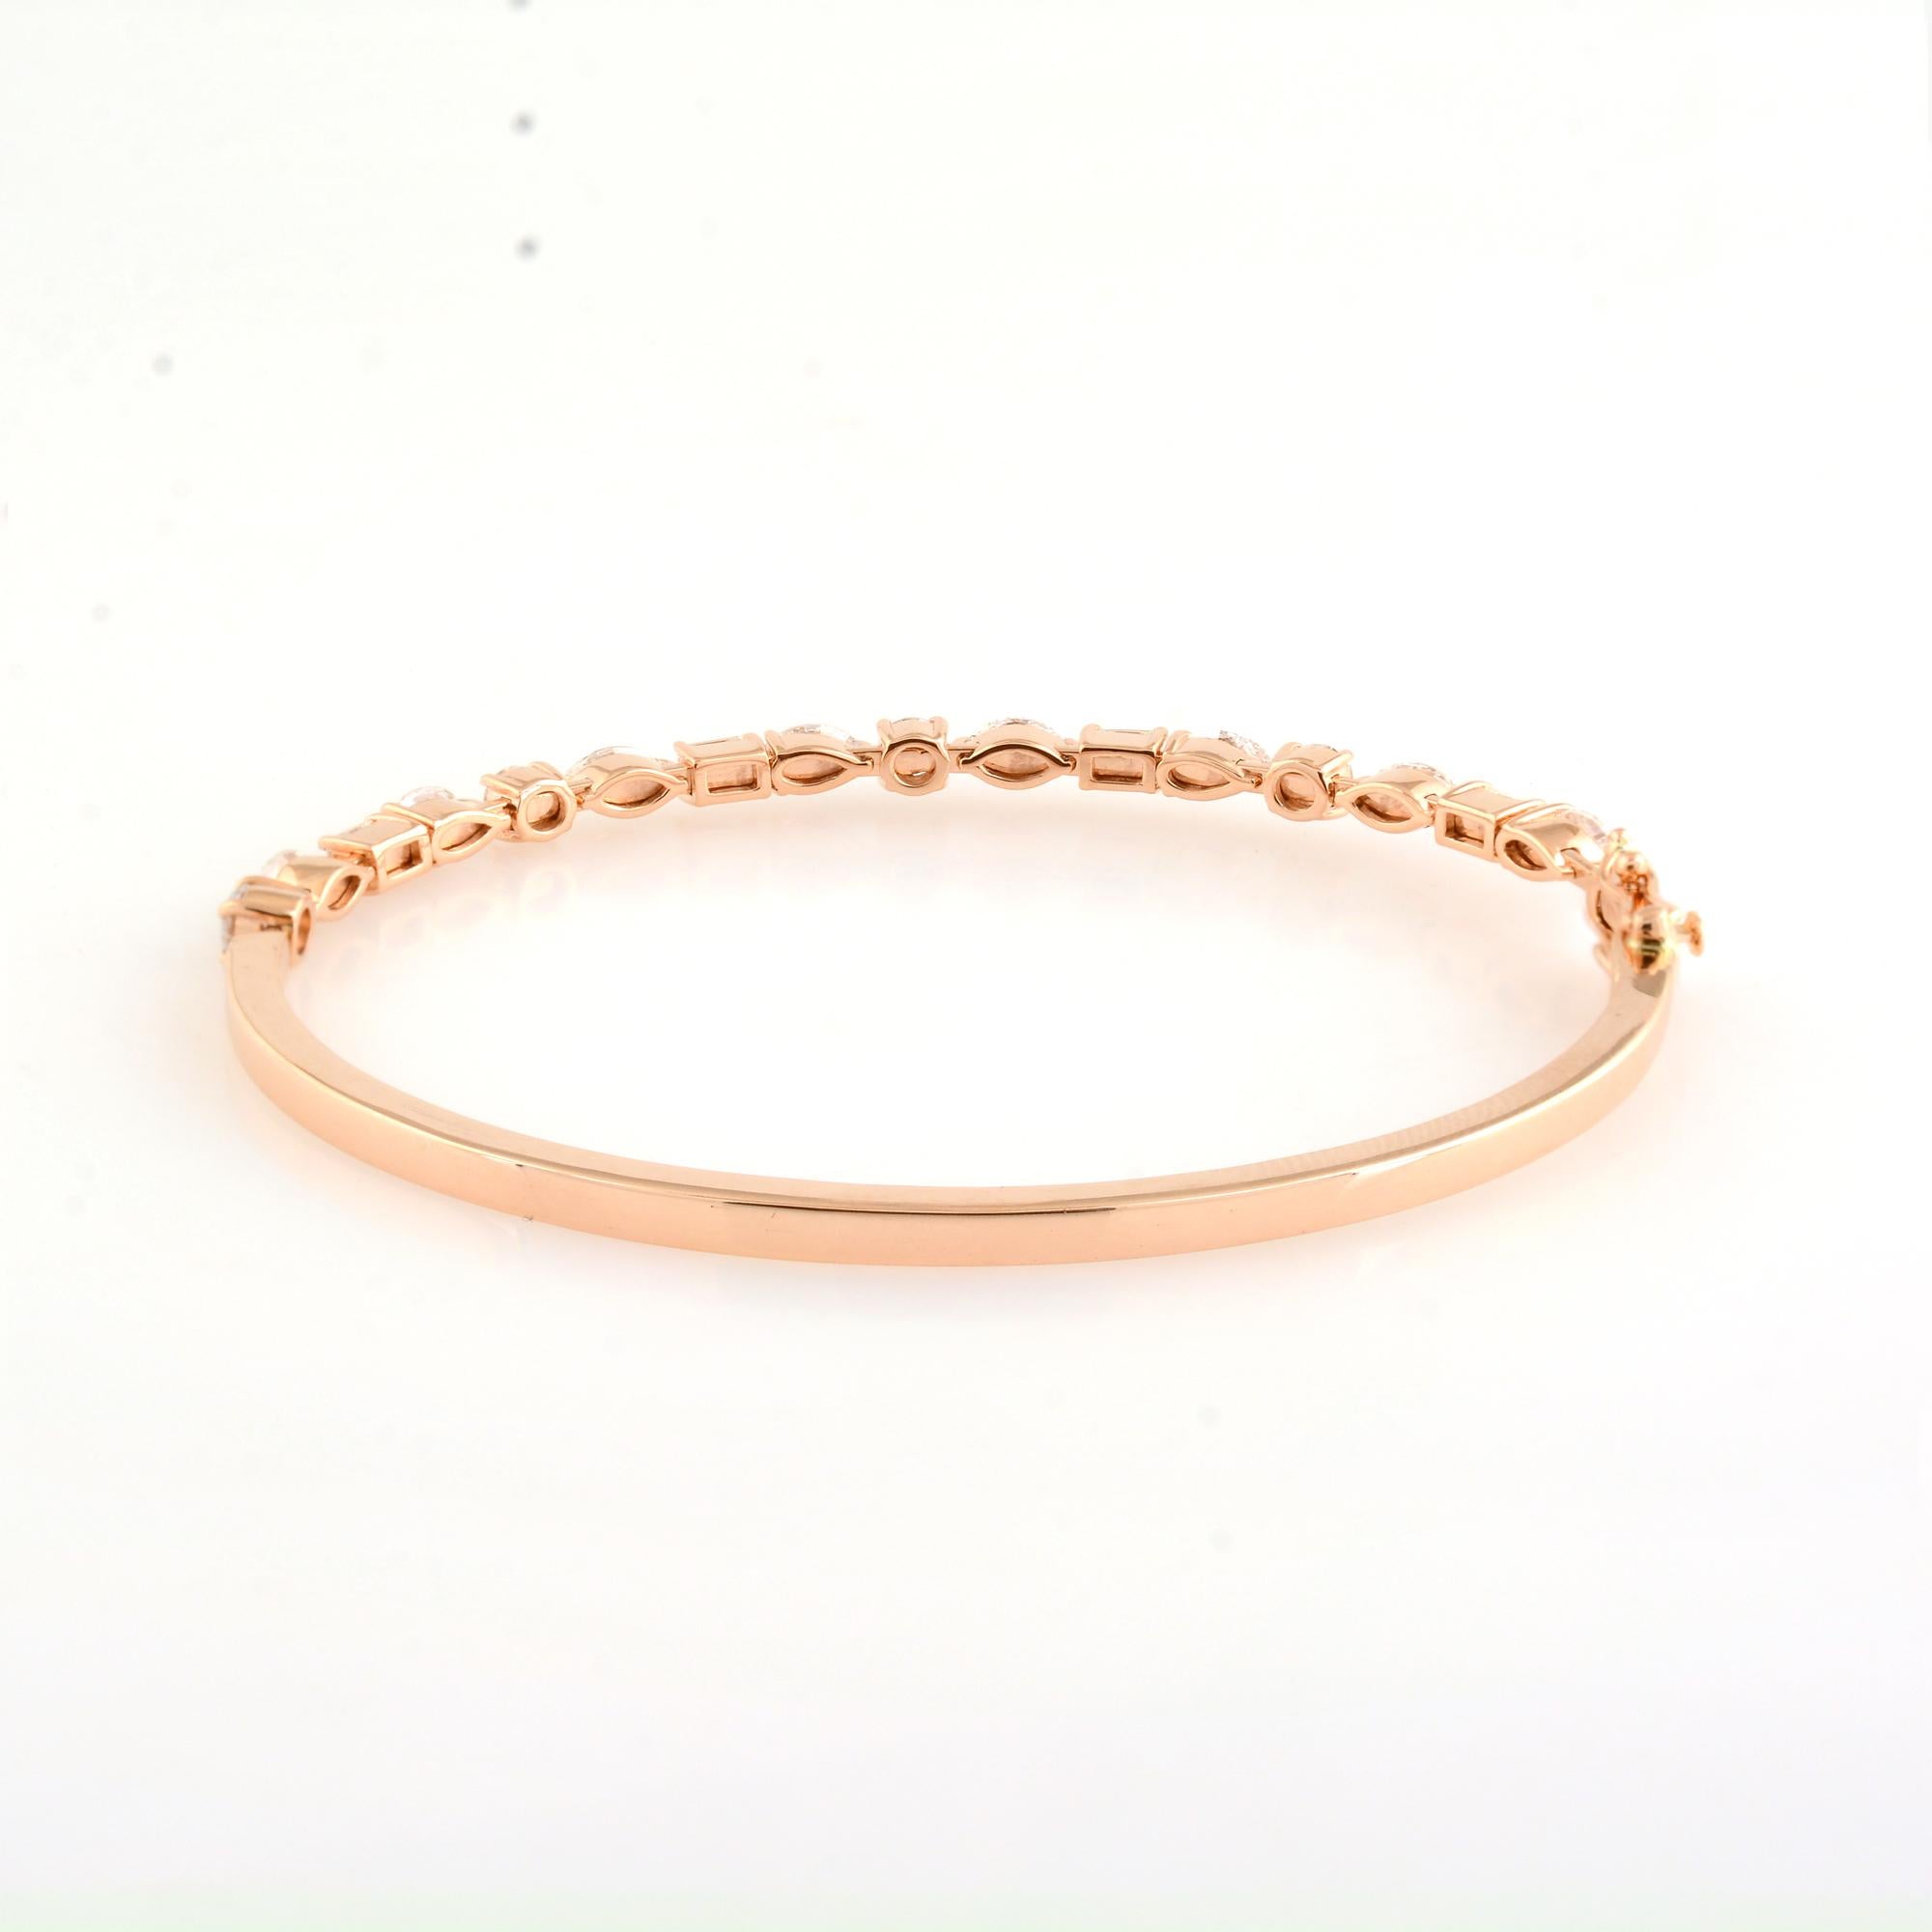 Women's 3.25 Carat SI Clarity HI Color Diamond Bangle Bracelet 14k Rose Gold Jewelry For Sale